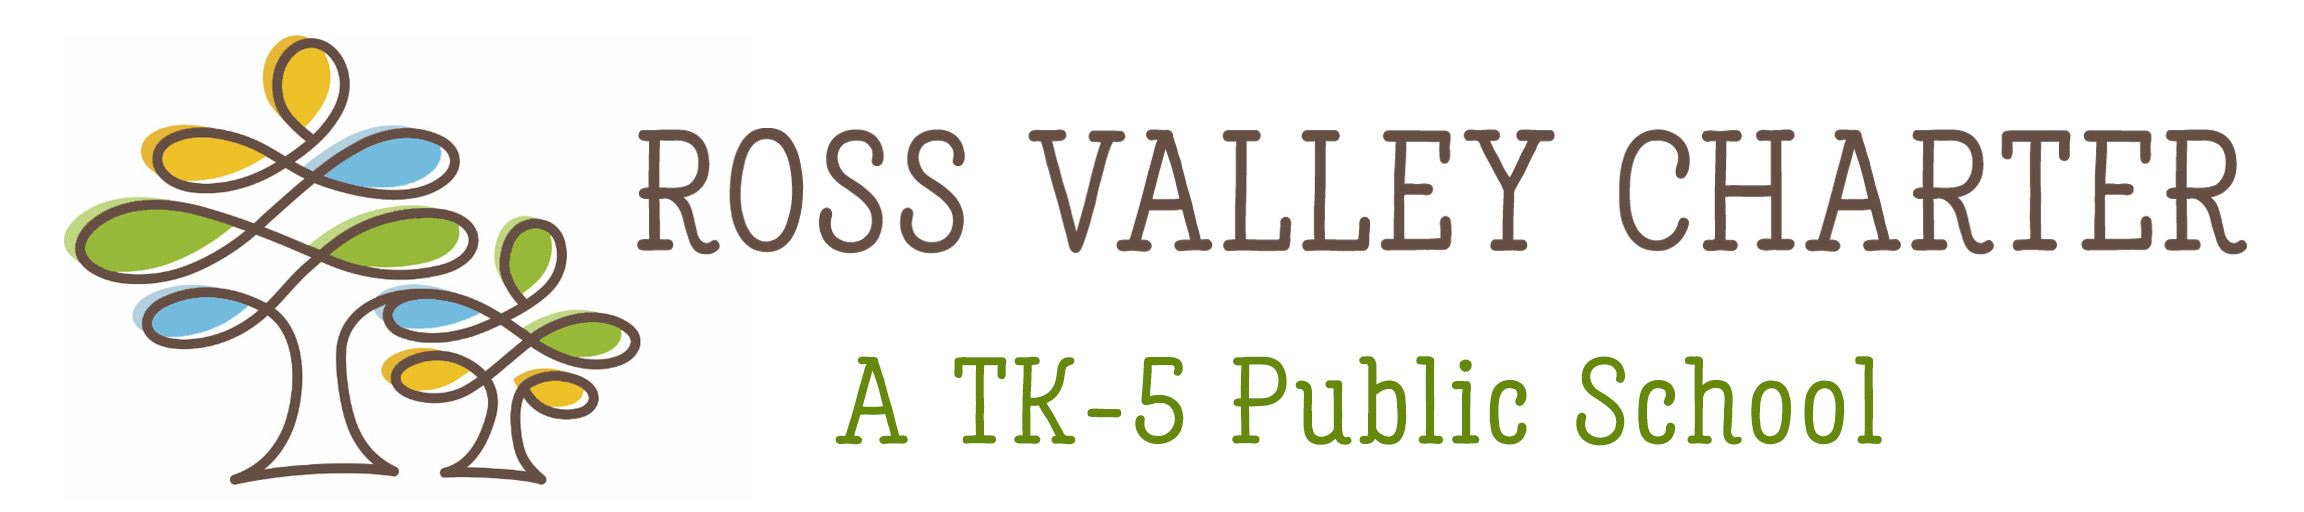 Ross Valley Charter Logo